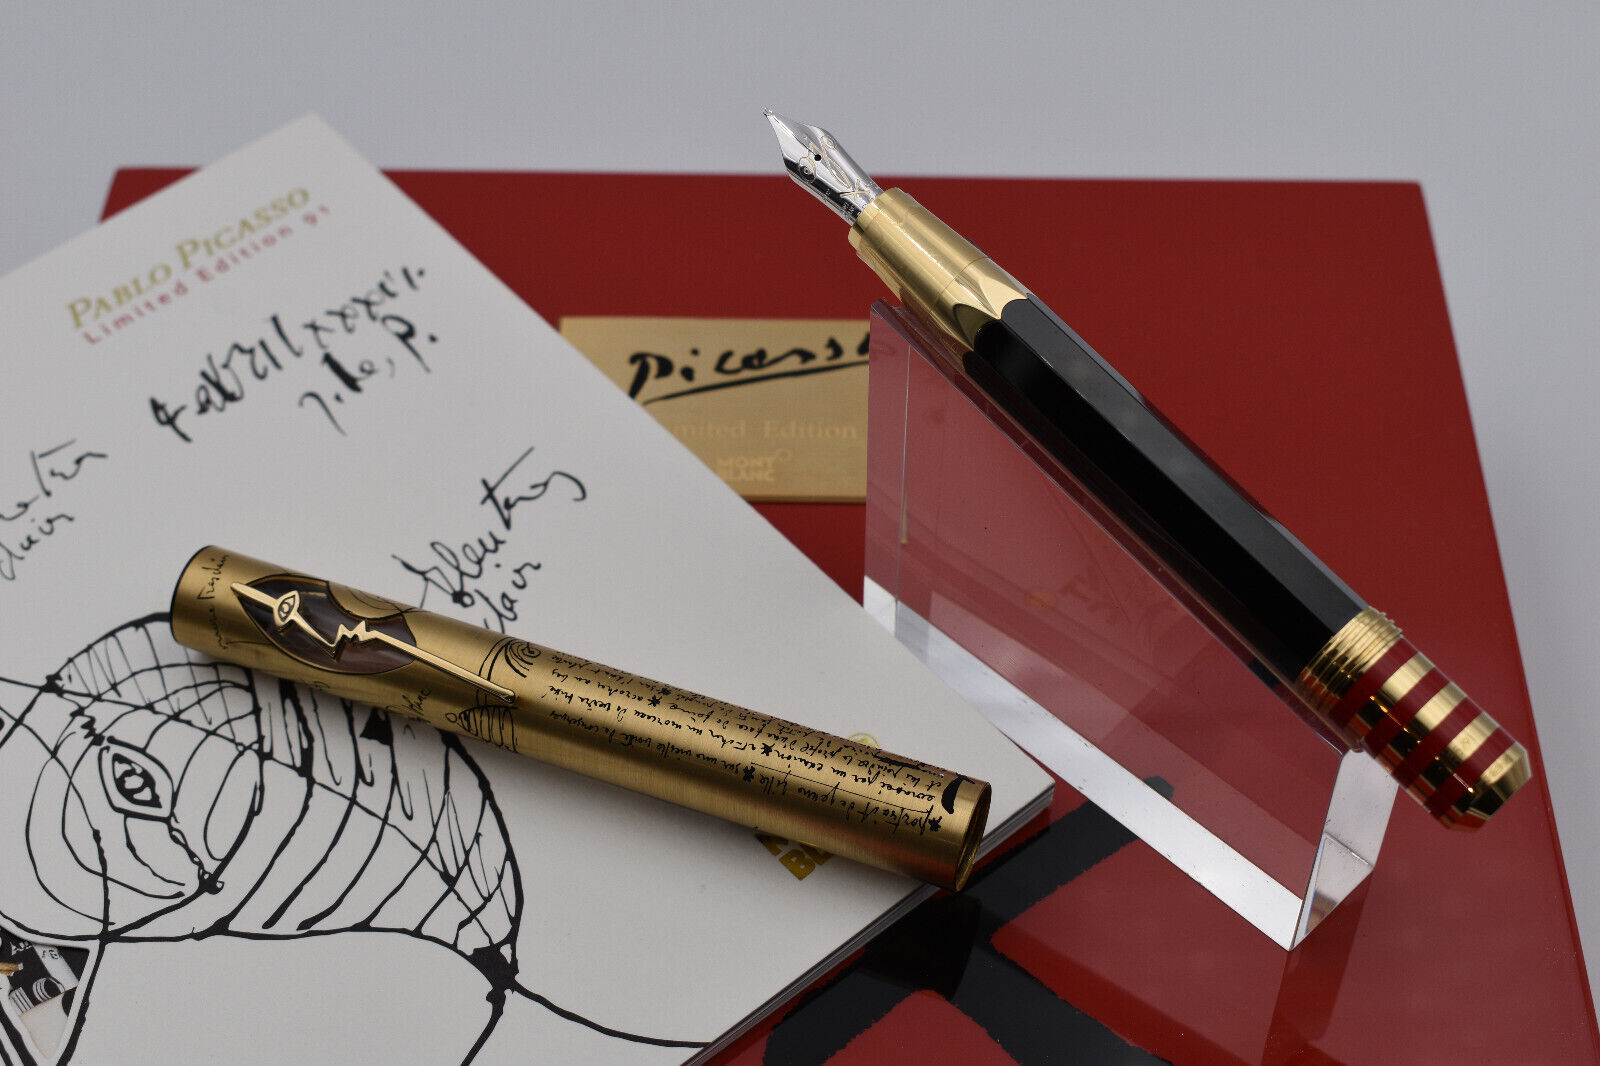 MONTBLANC PABLO PICASSO Limited Edition 91 Atelier Privés Artisan - Fountain Pen